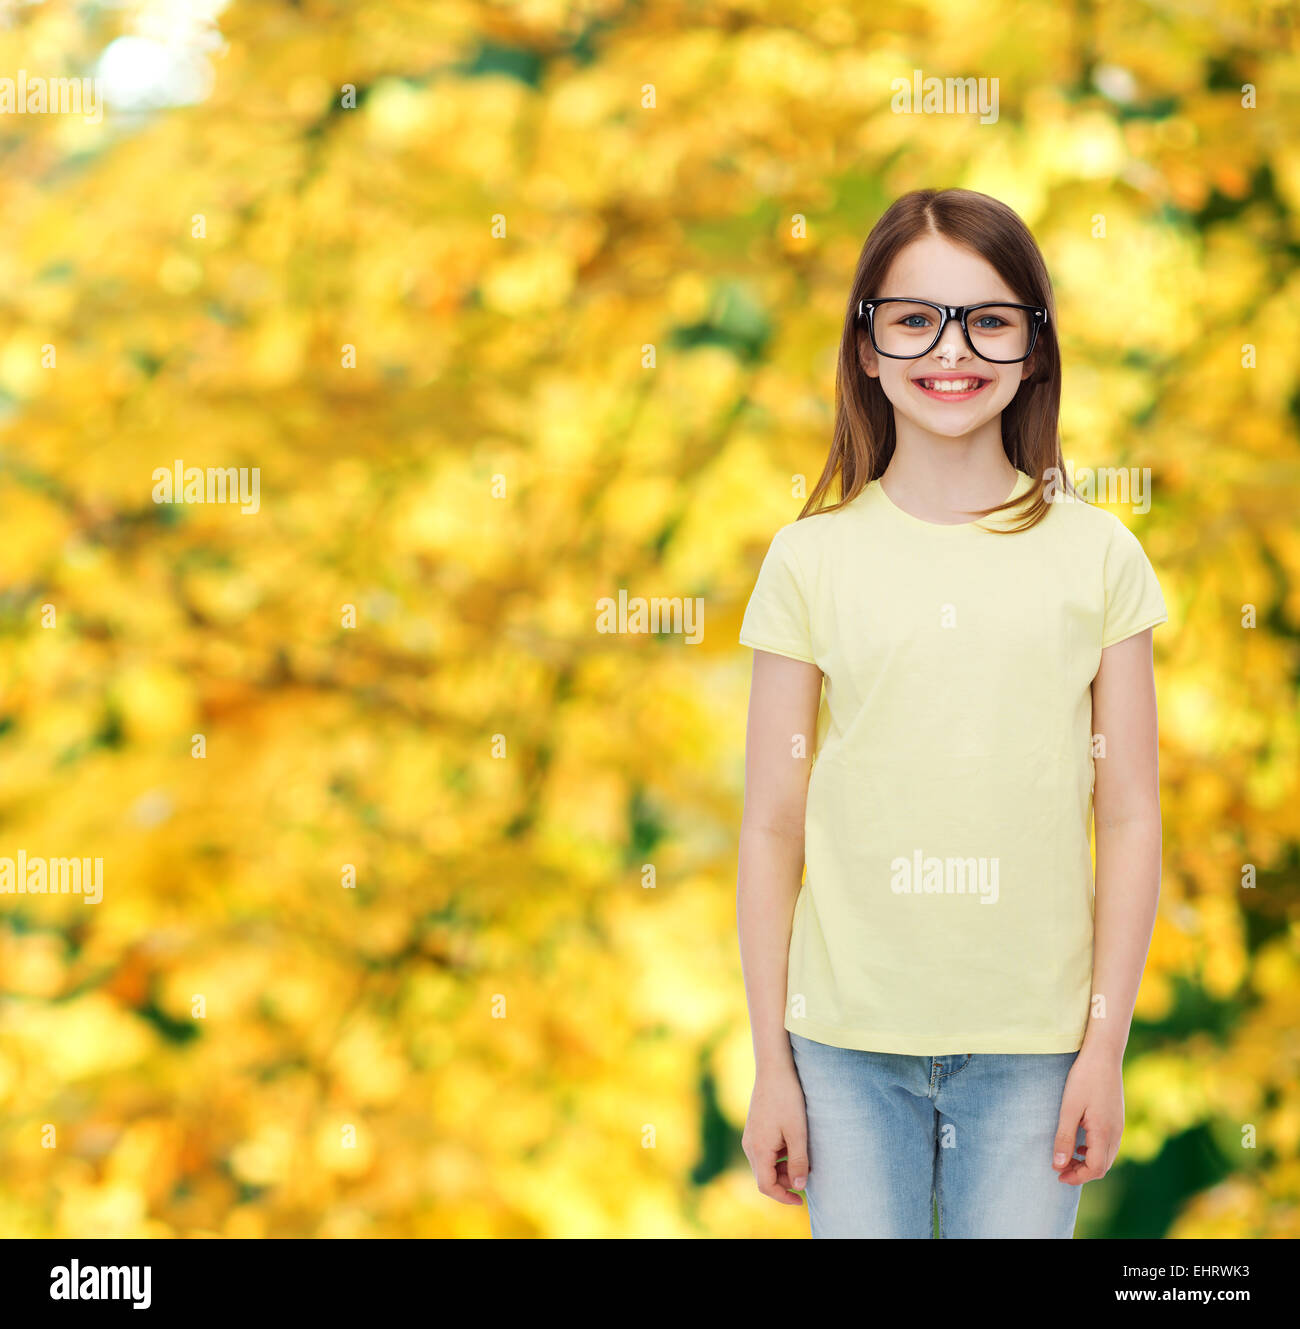 Smiling cute little girl in black lunettes Banque D'Images